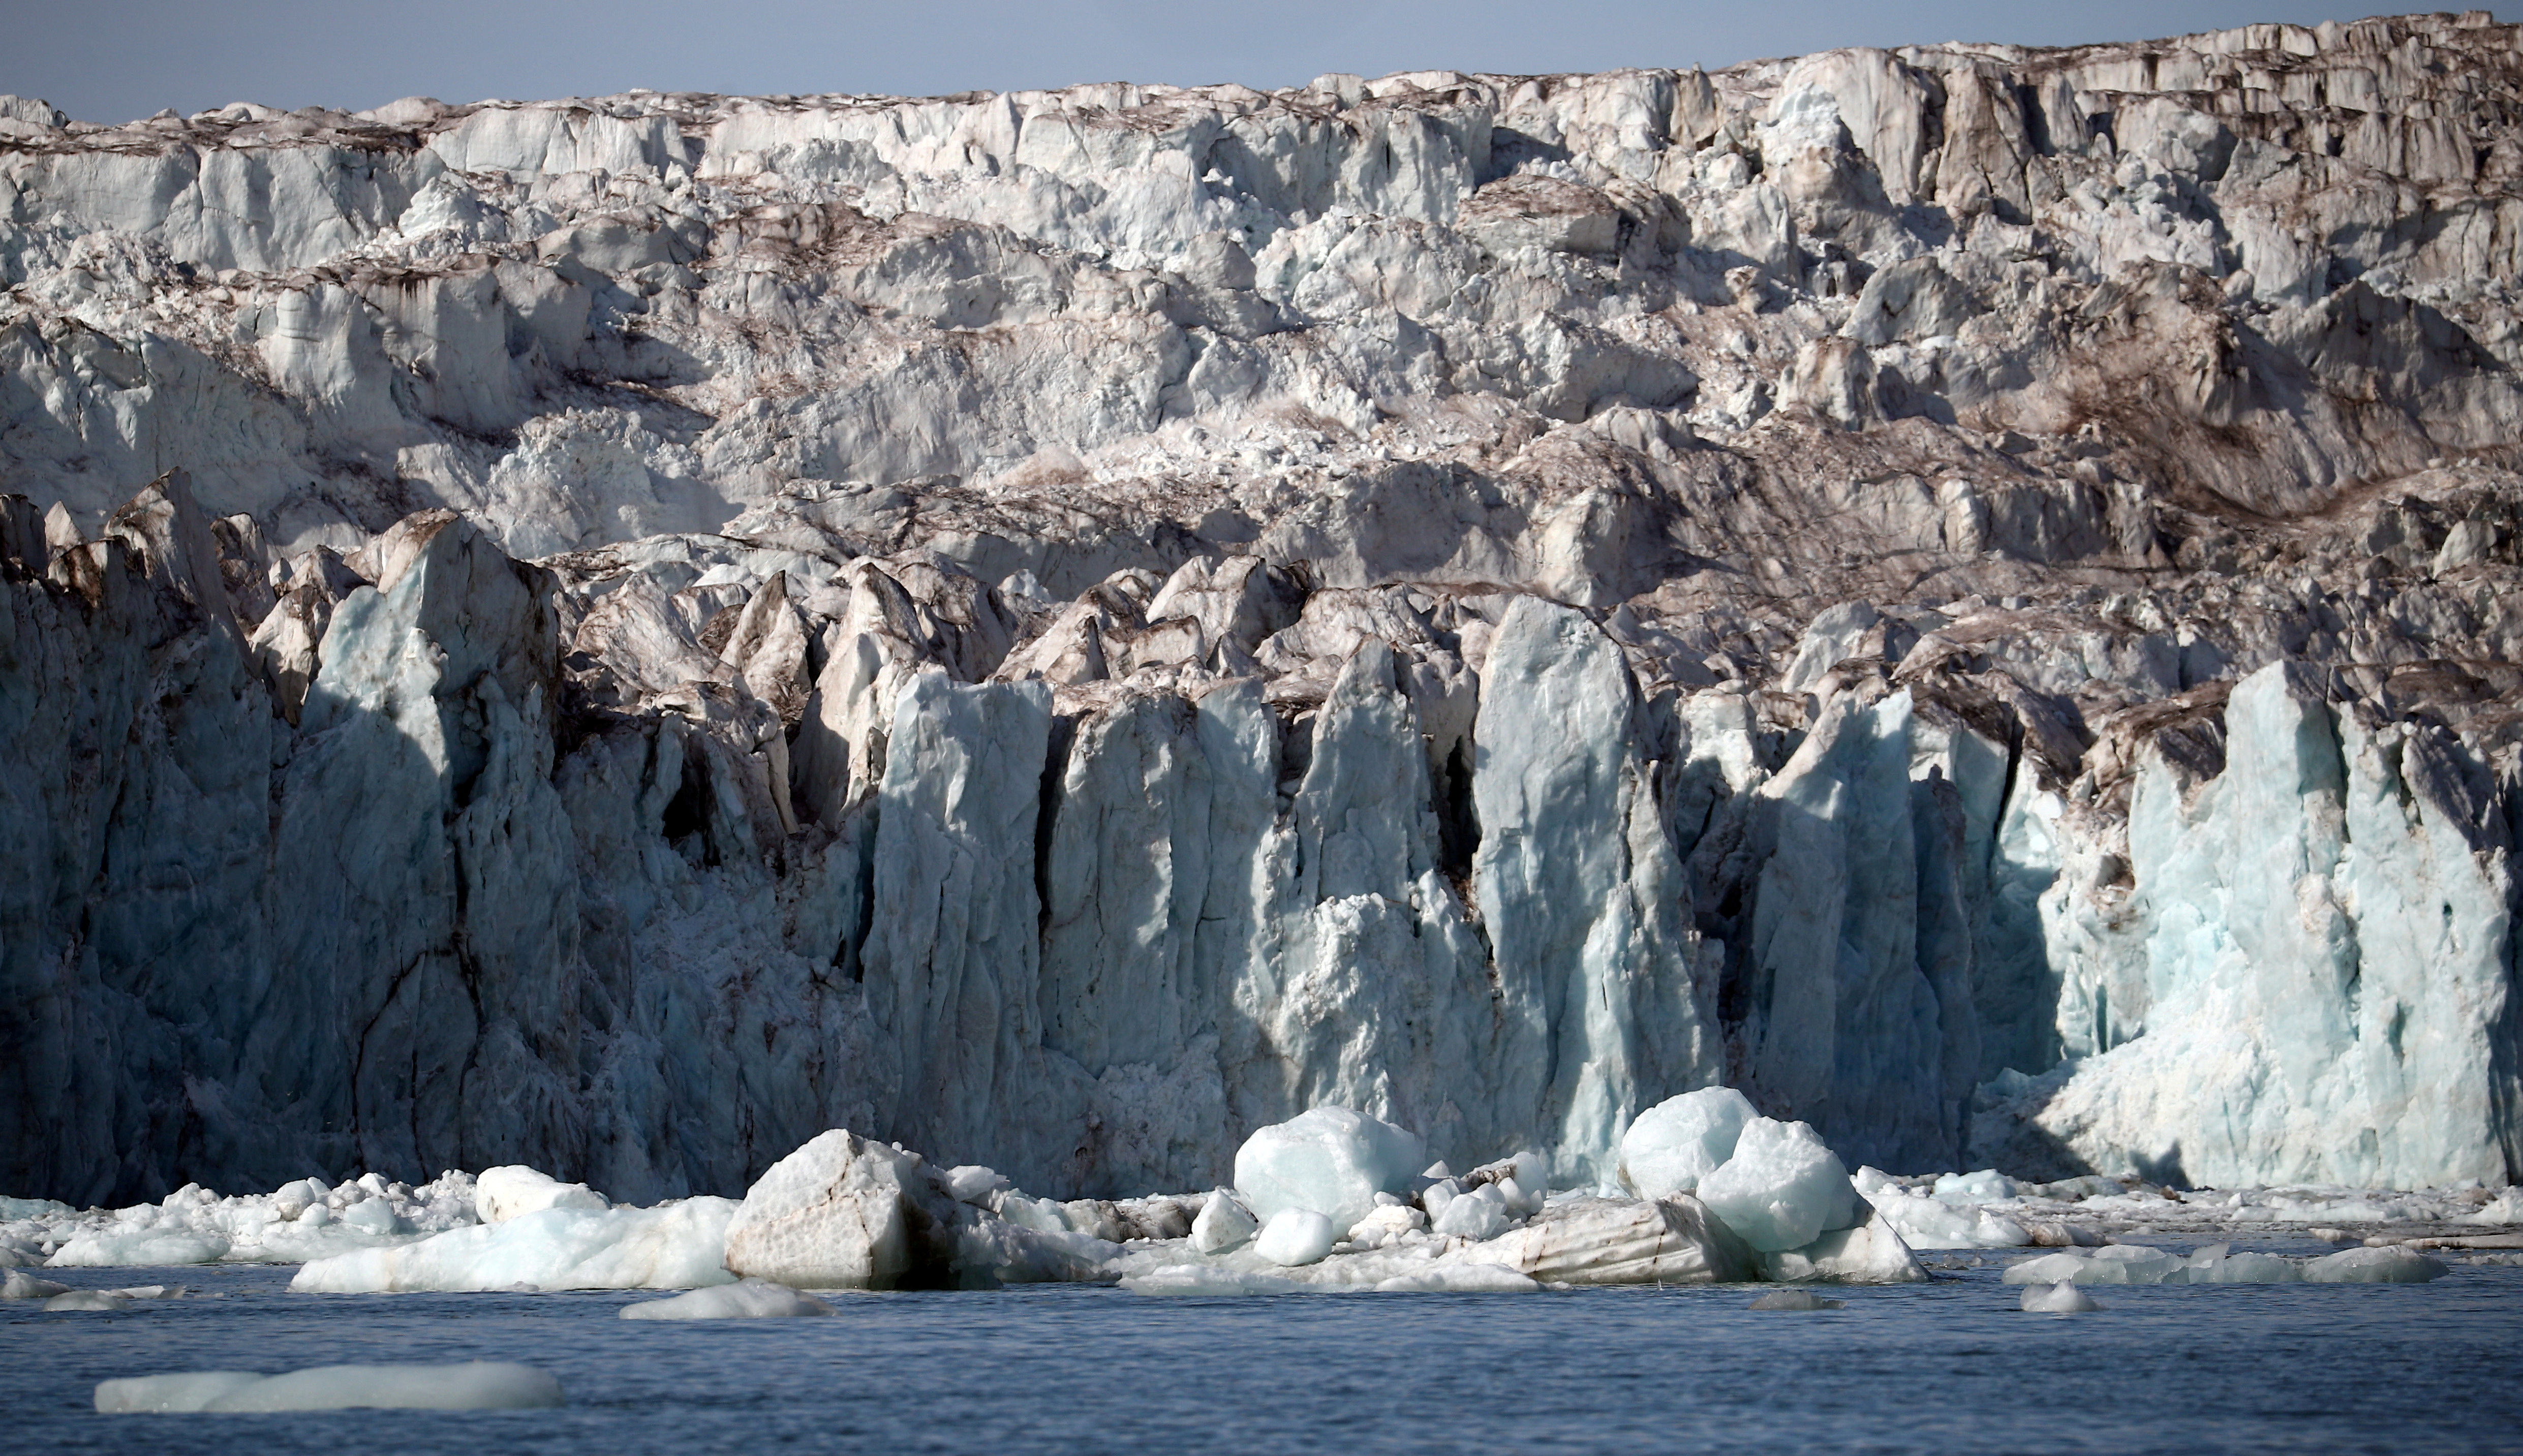 The Wahlenberg Glacier is seen in Oscar II land at Spitsbergen in Svalbard